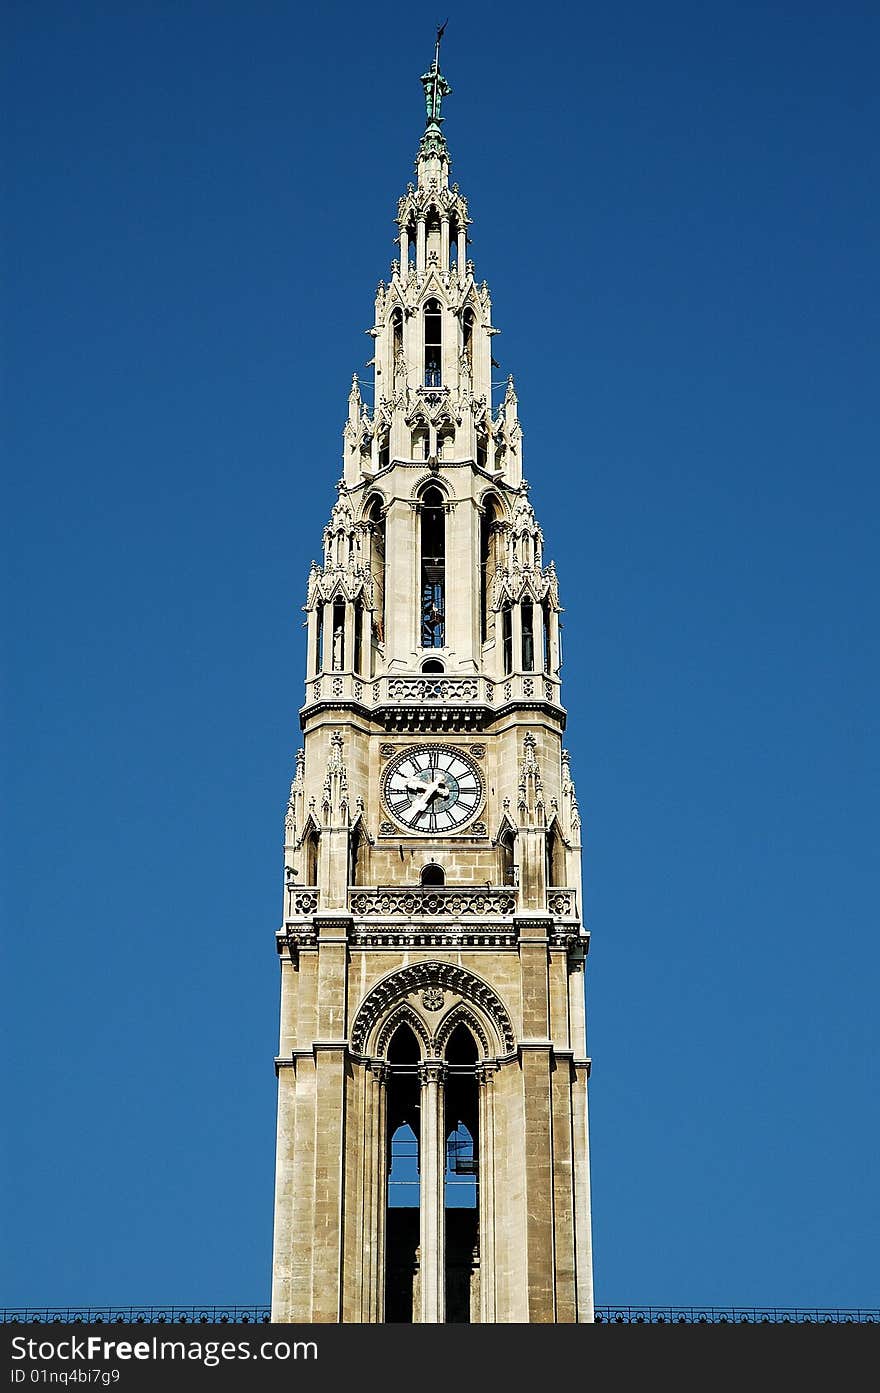 A church steeple in the clear blue sky